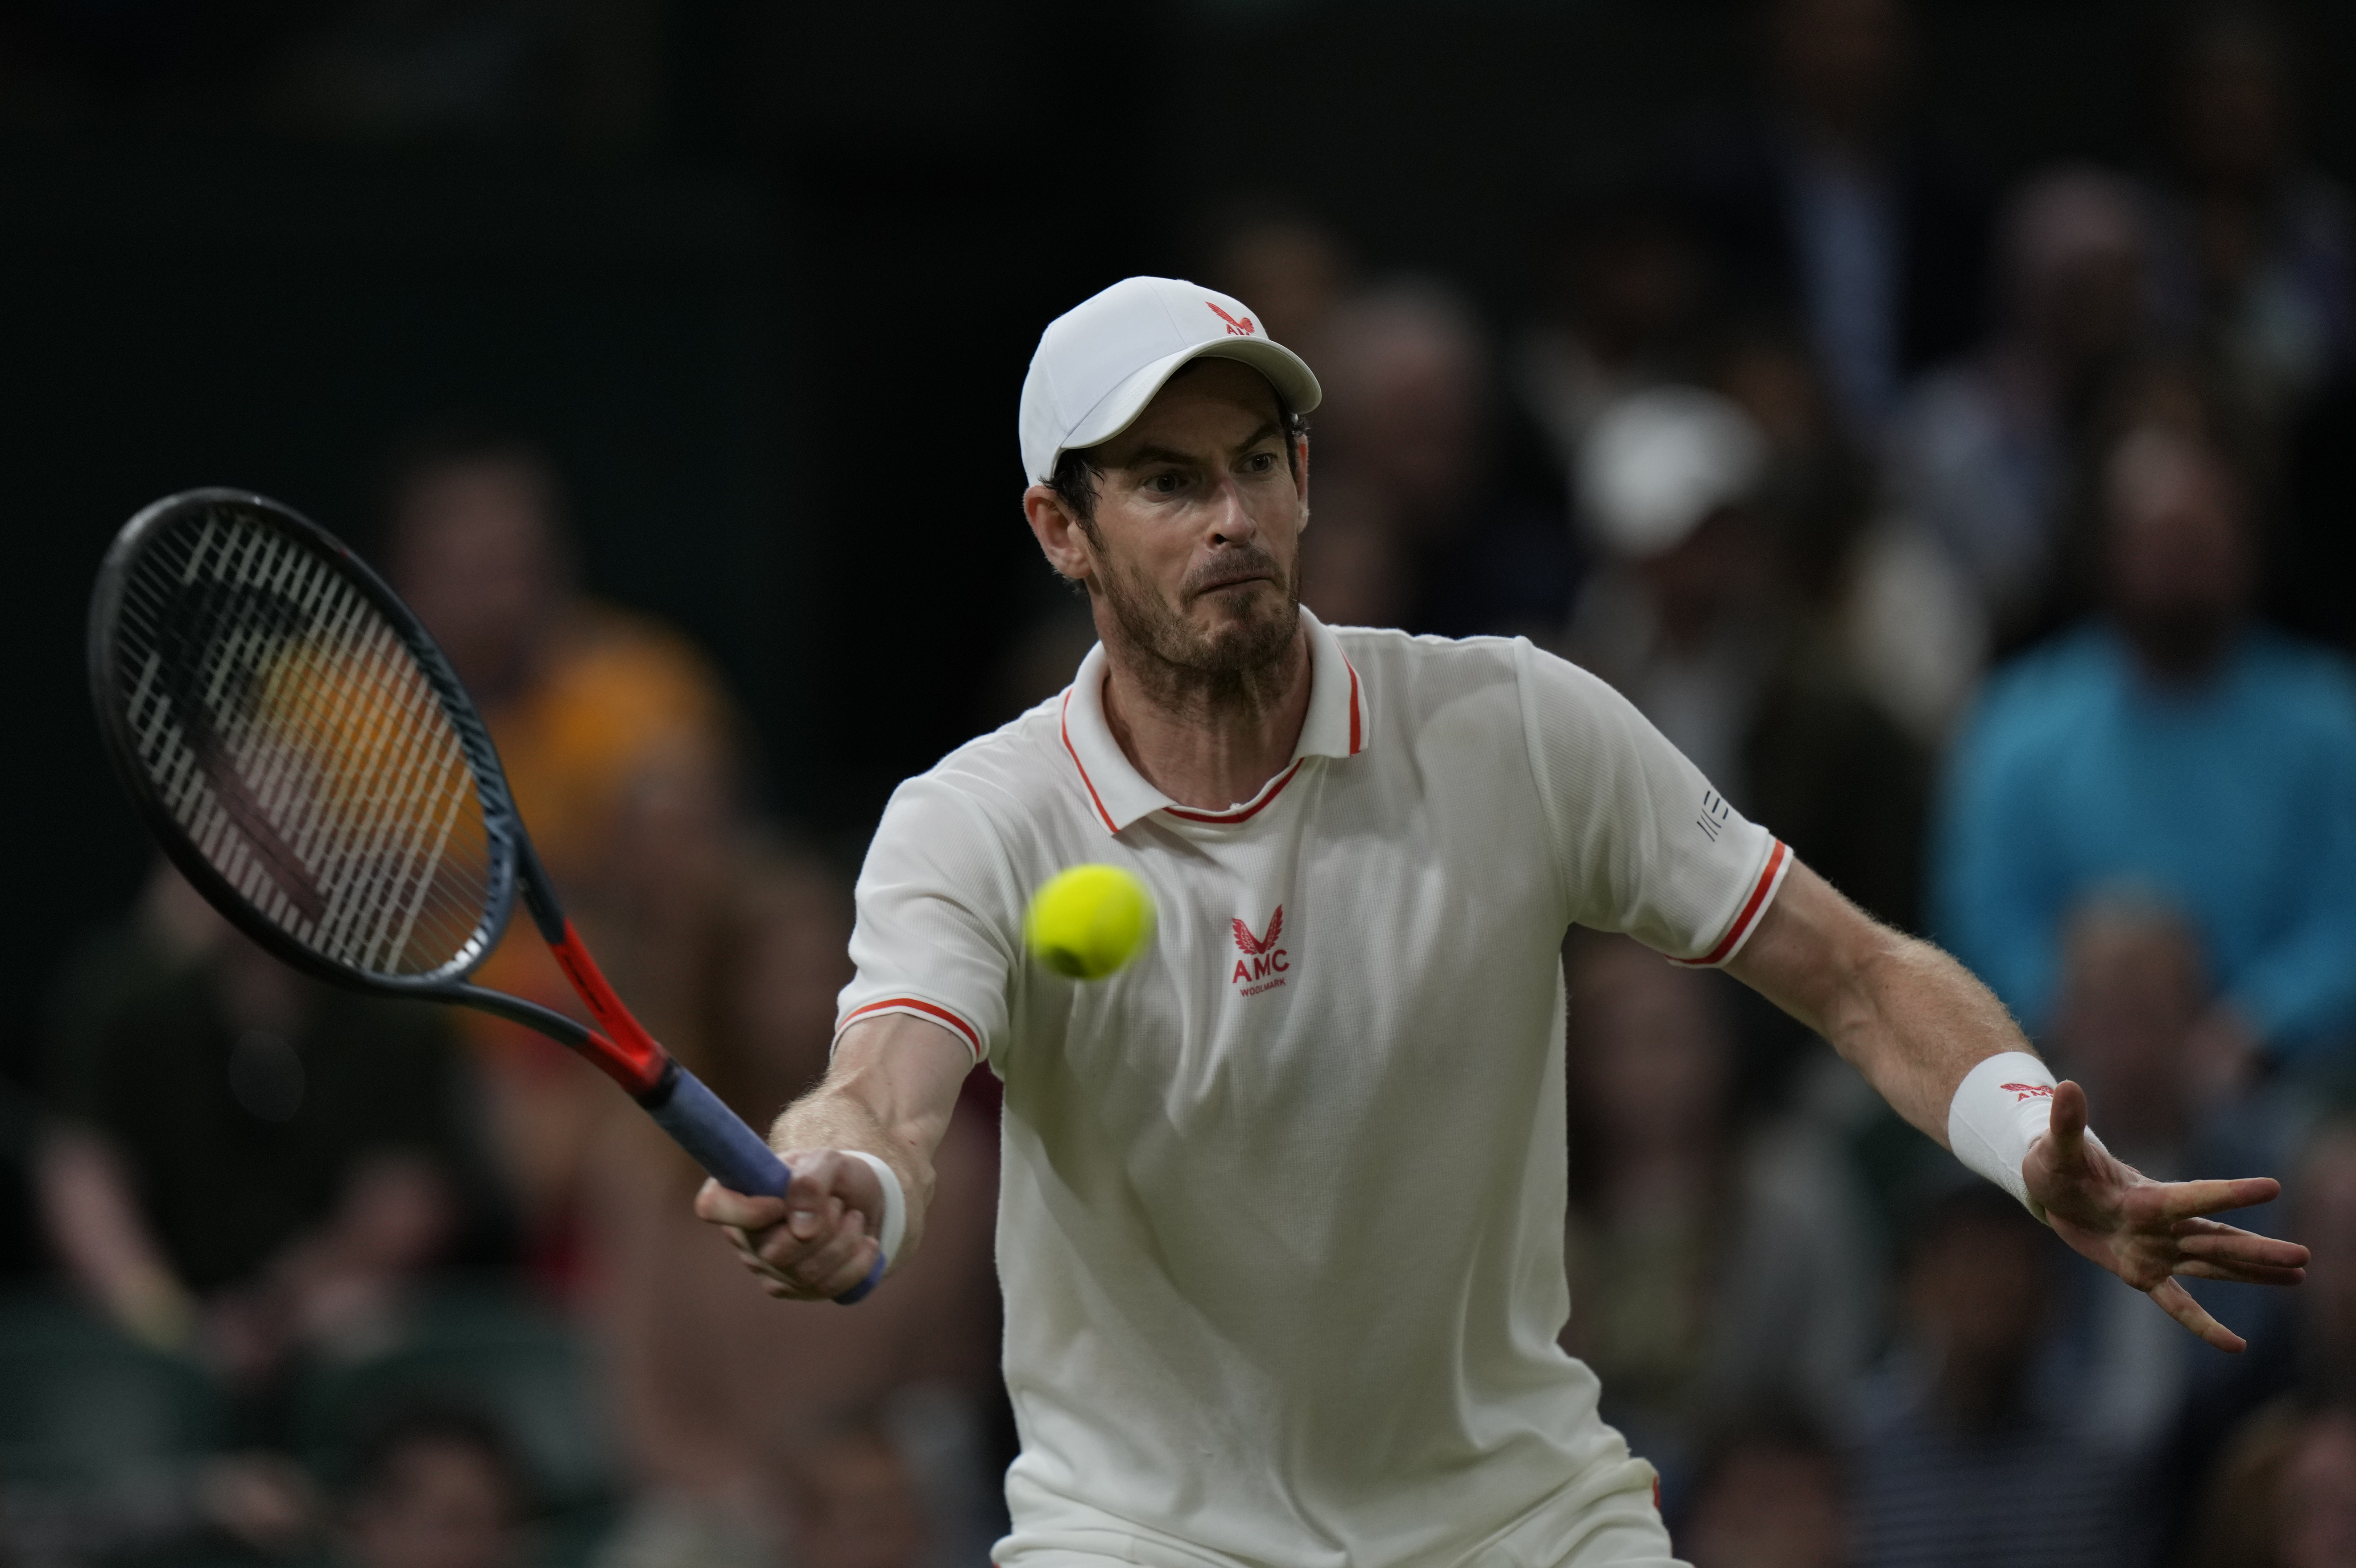 Wimbledon Day 5 free live stream (7/2/21) How to watch Novak Djokovic, Andy Murray, time, chanel